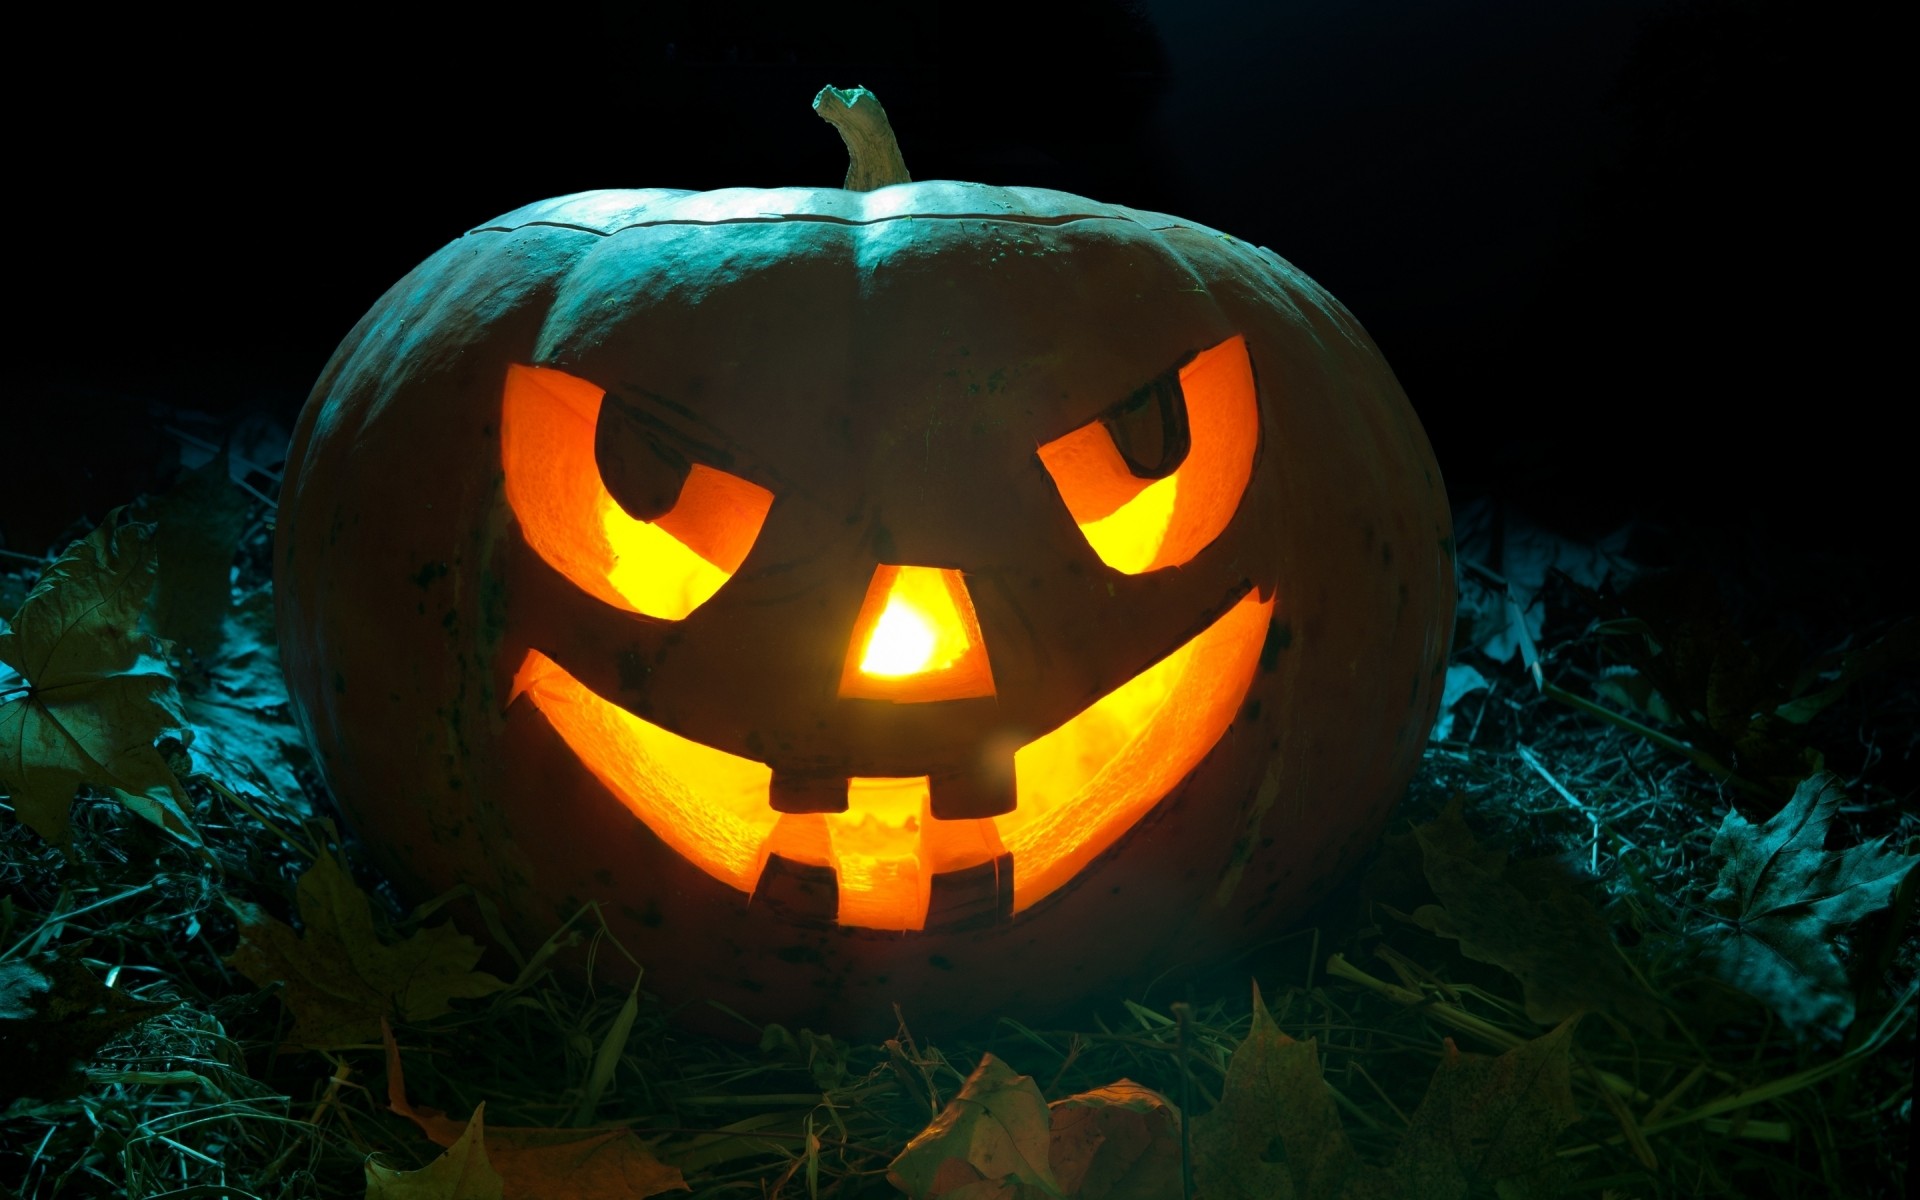 Creepy pumpkin lantern for Halloween wallpaper